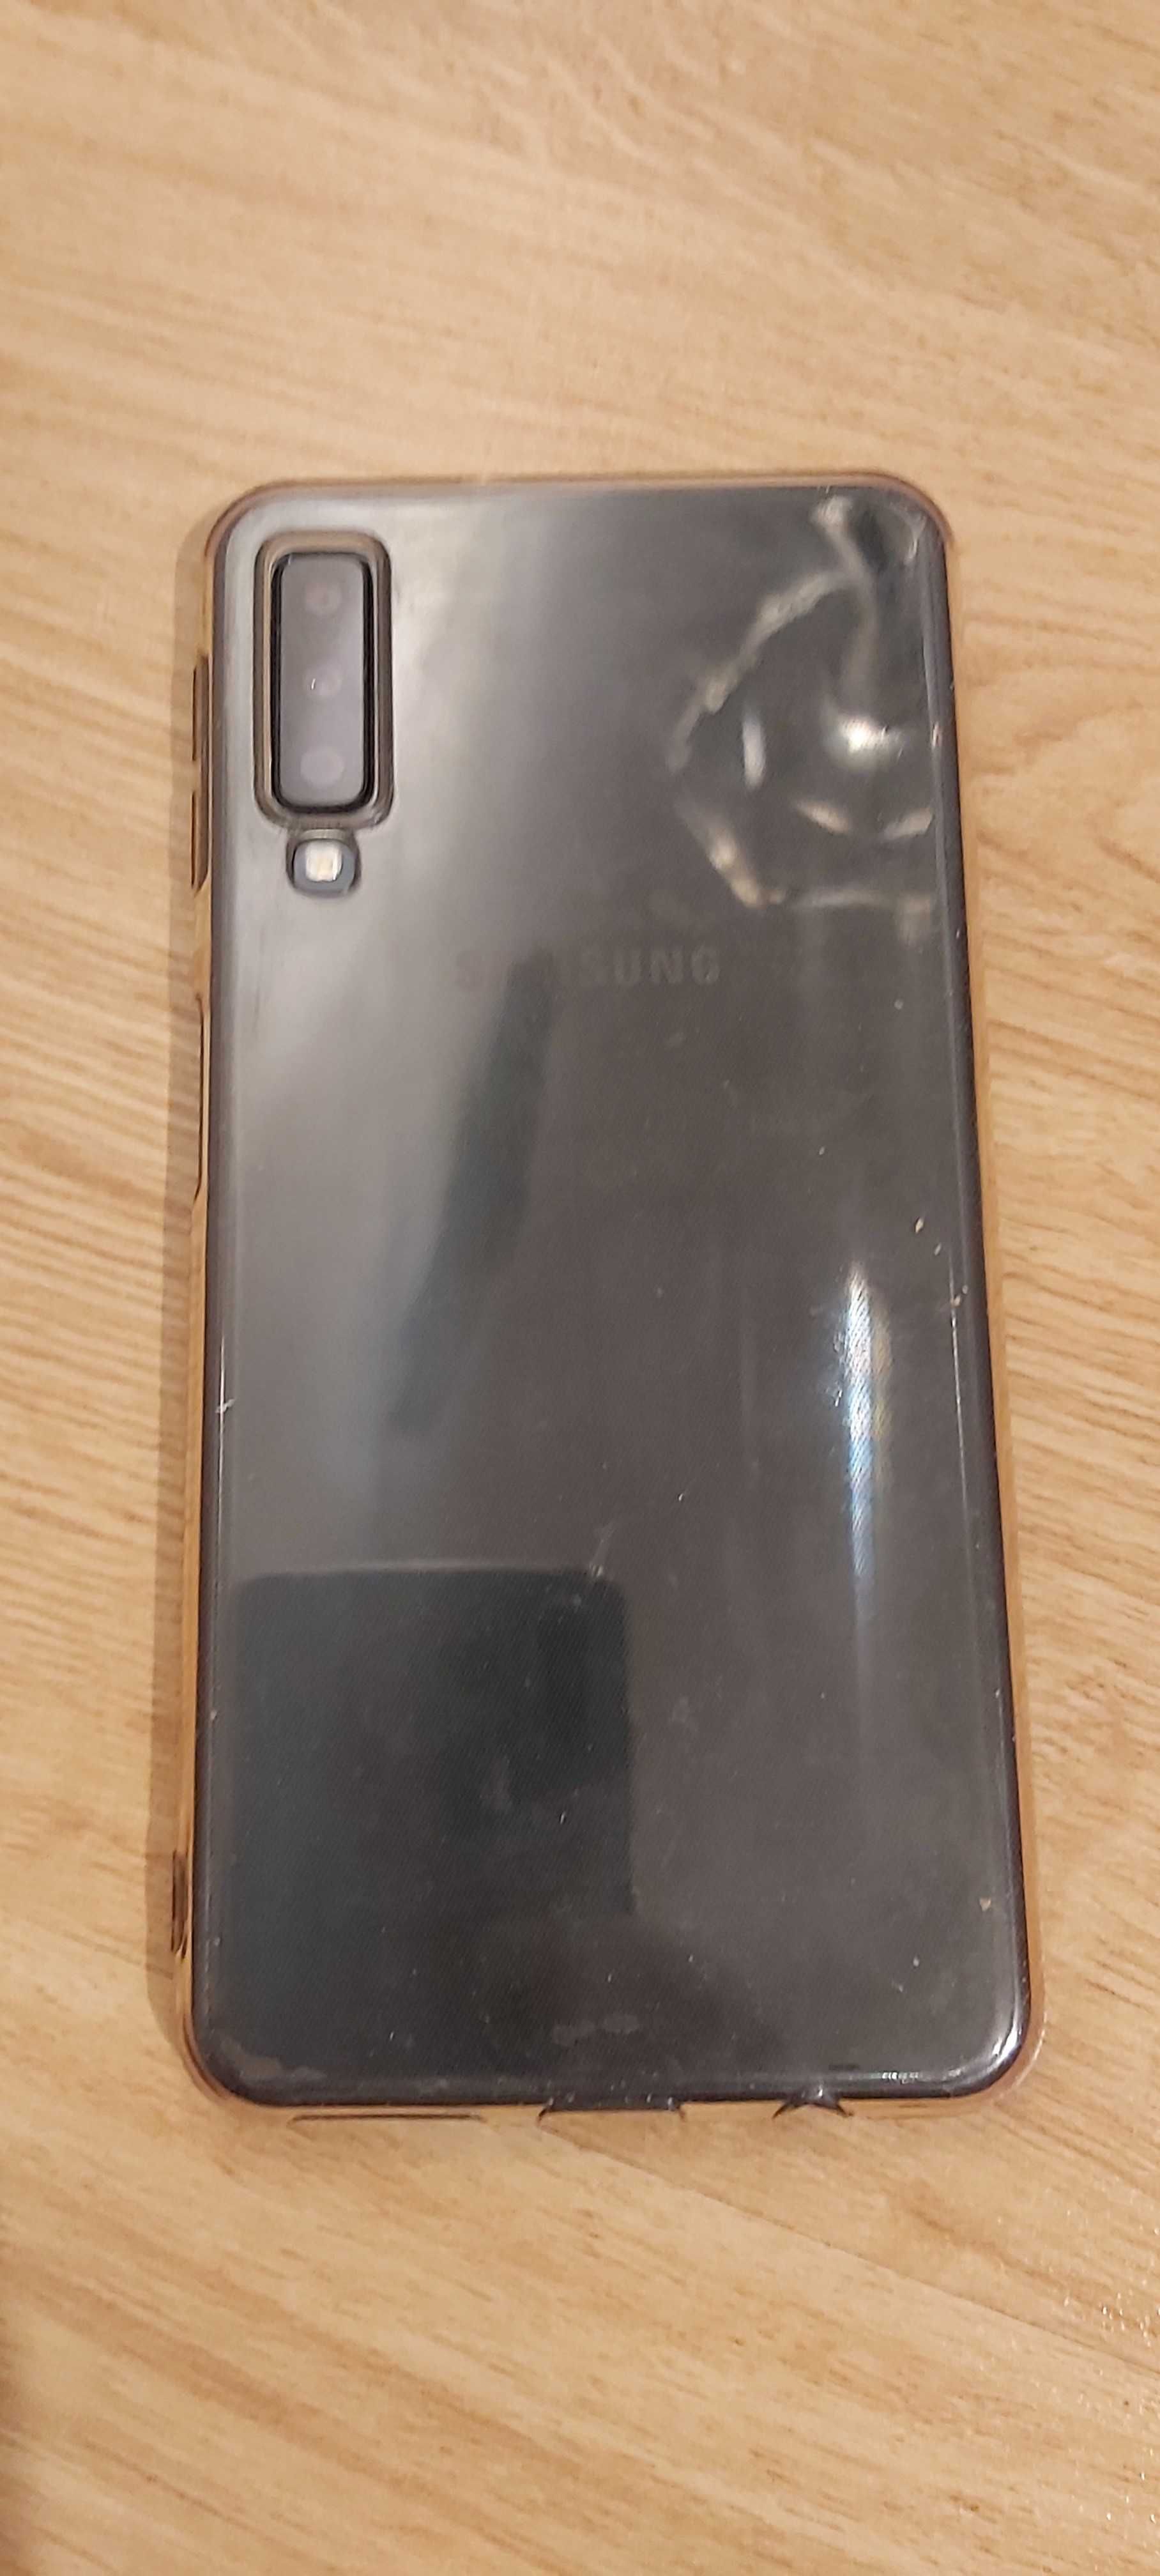 Vand Samsung A7 model 2018 SM-A750FN